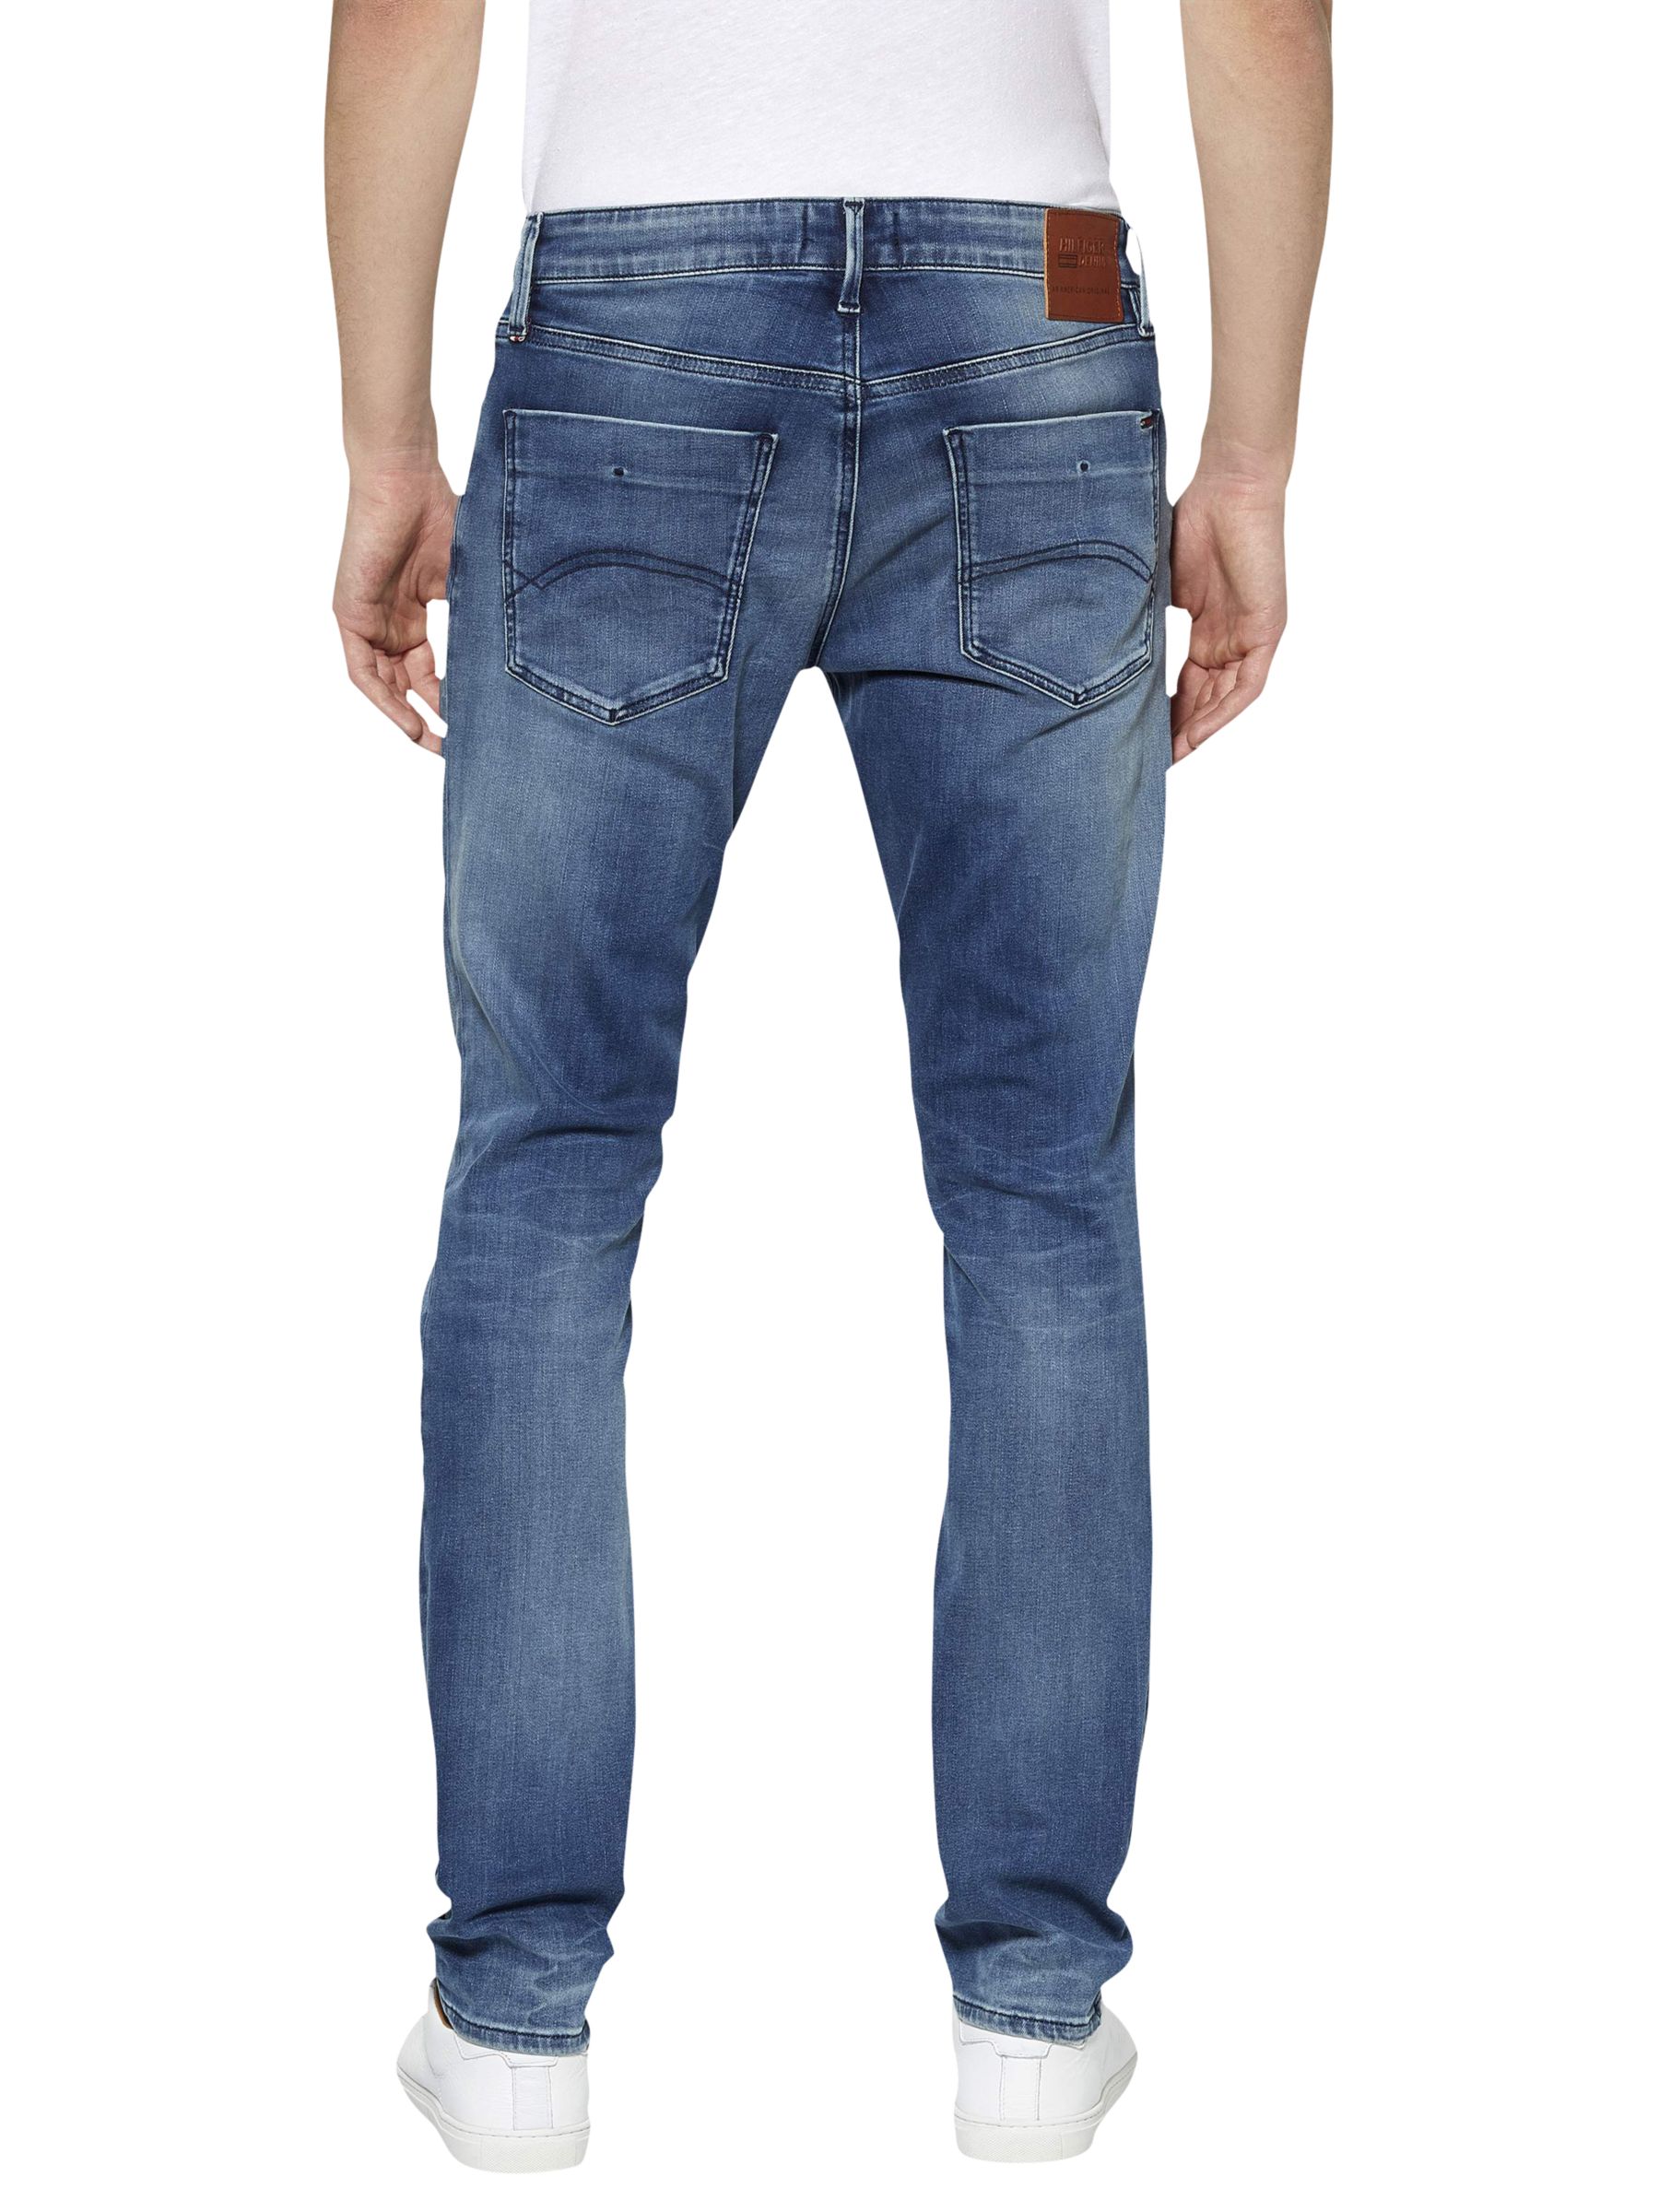 jeans tommy hilfiger scanton dynamic stretch